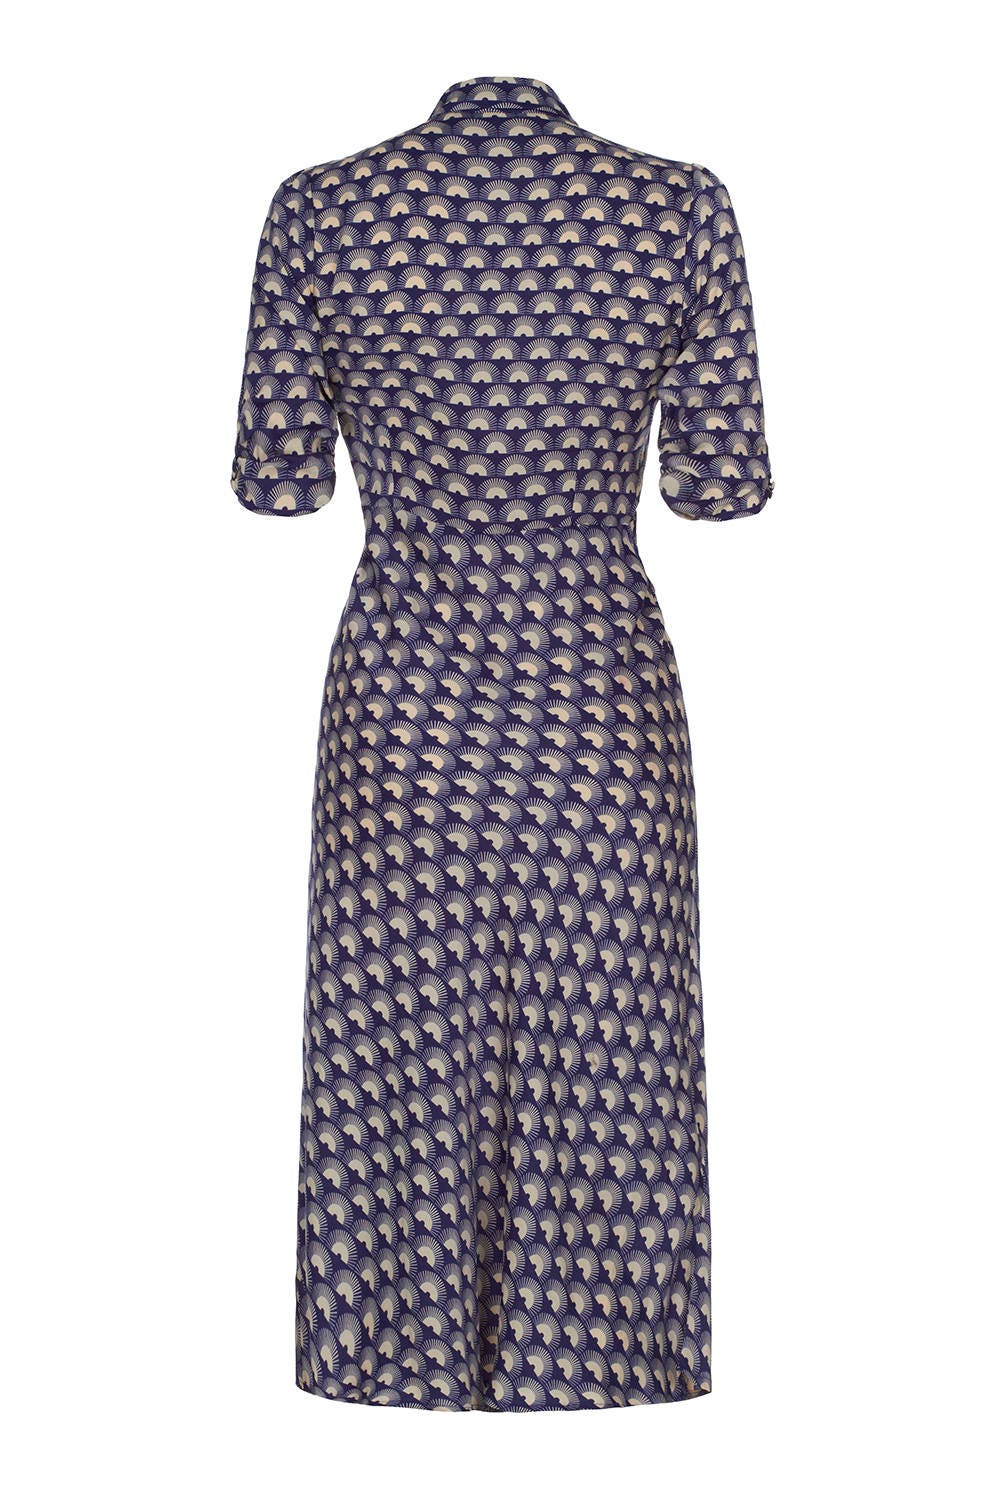 1940s Style Midi Dress in Retro Navy Fan Print Crepe - Etsy